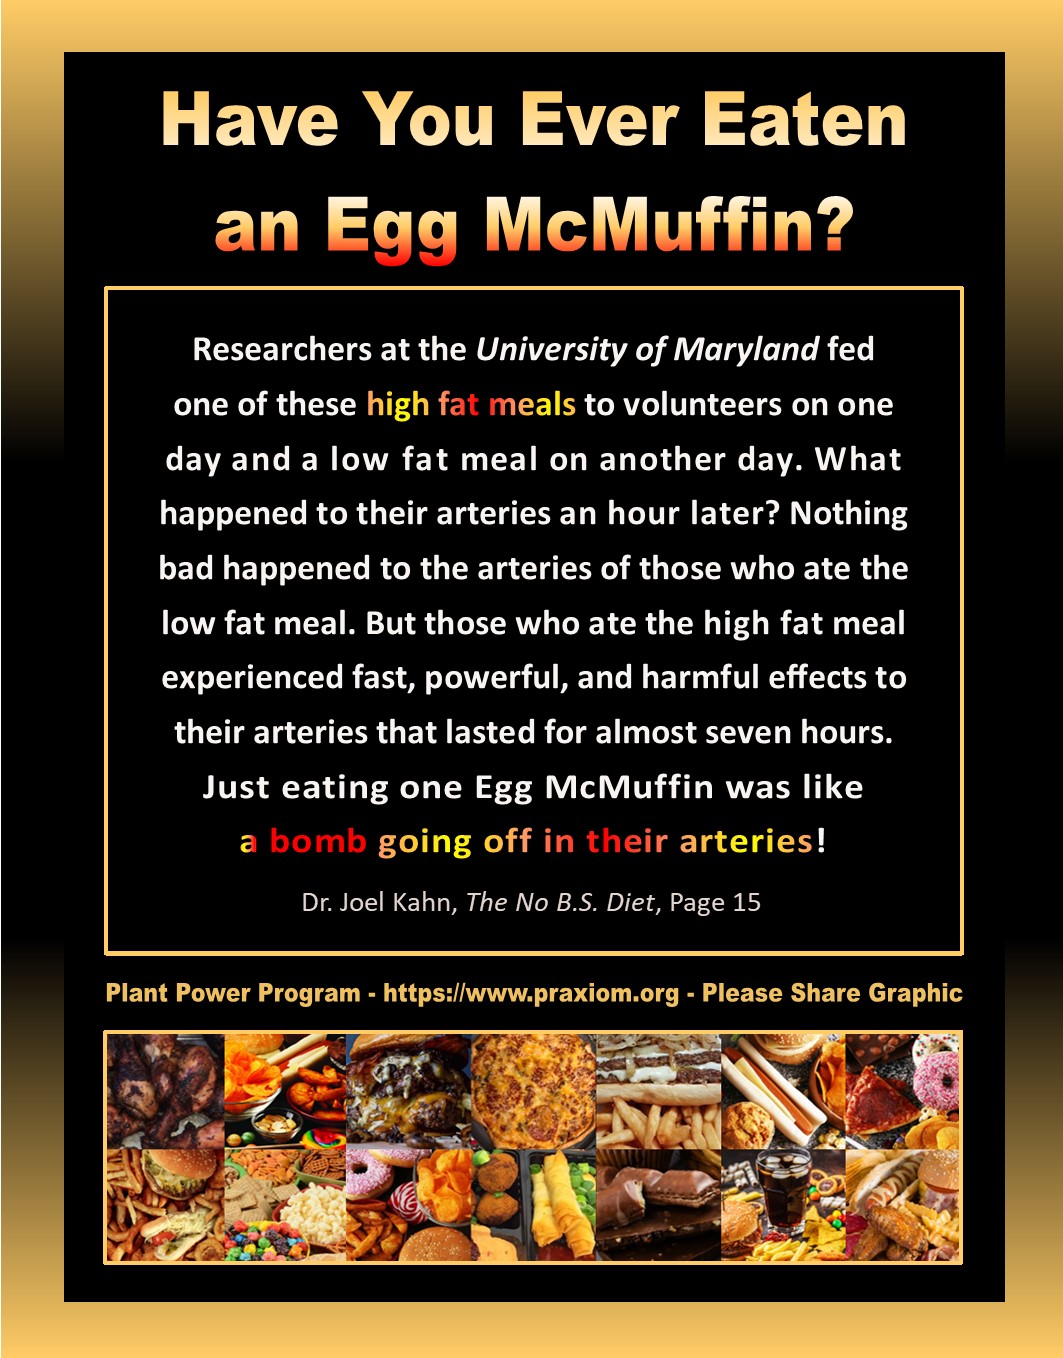 Have you ever eaten an Egg McMuffin? Dr. Joel Kahn 